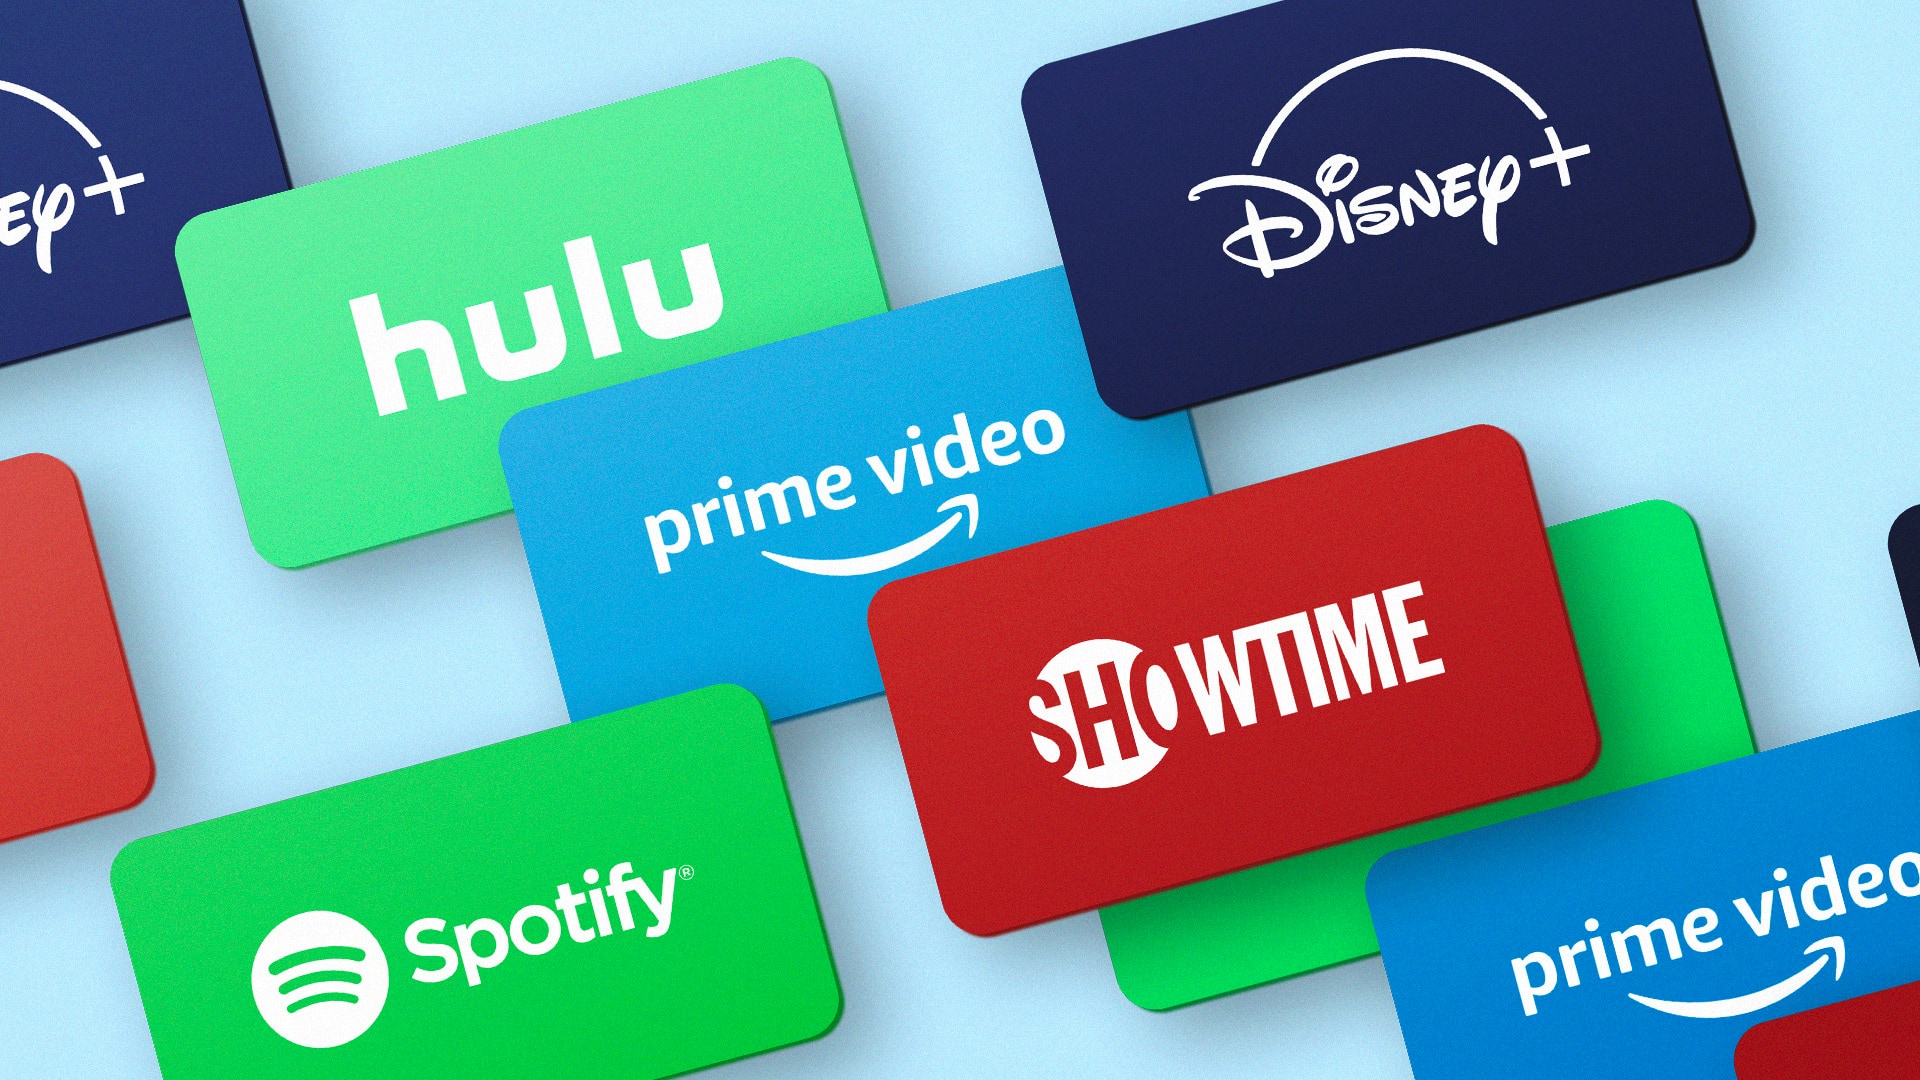 Hulu Spotify Showtime Disney Plus Prime Video Logos на синем фоне